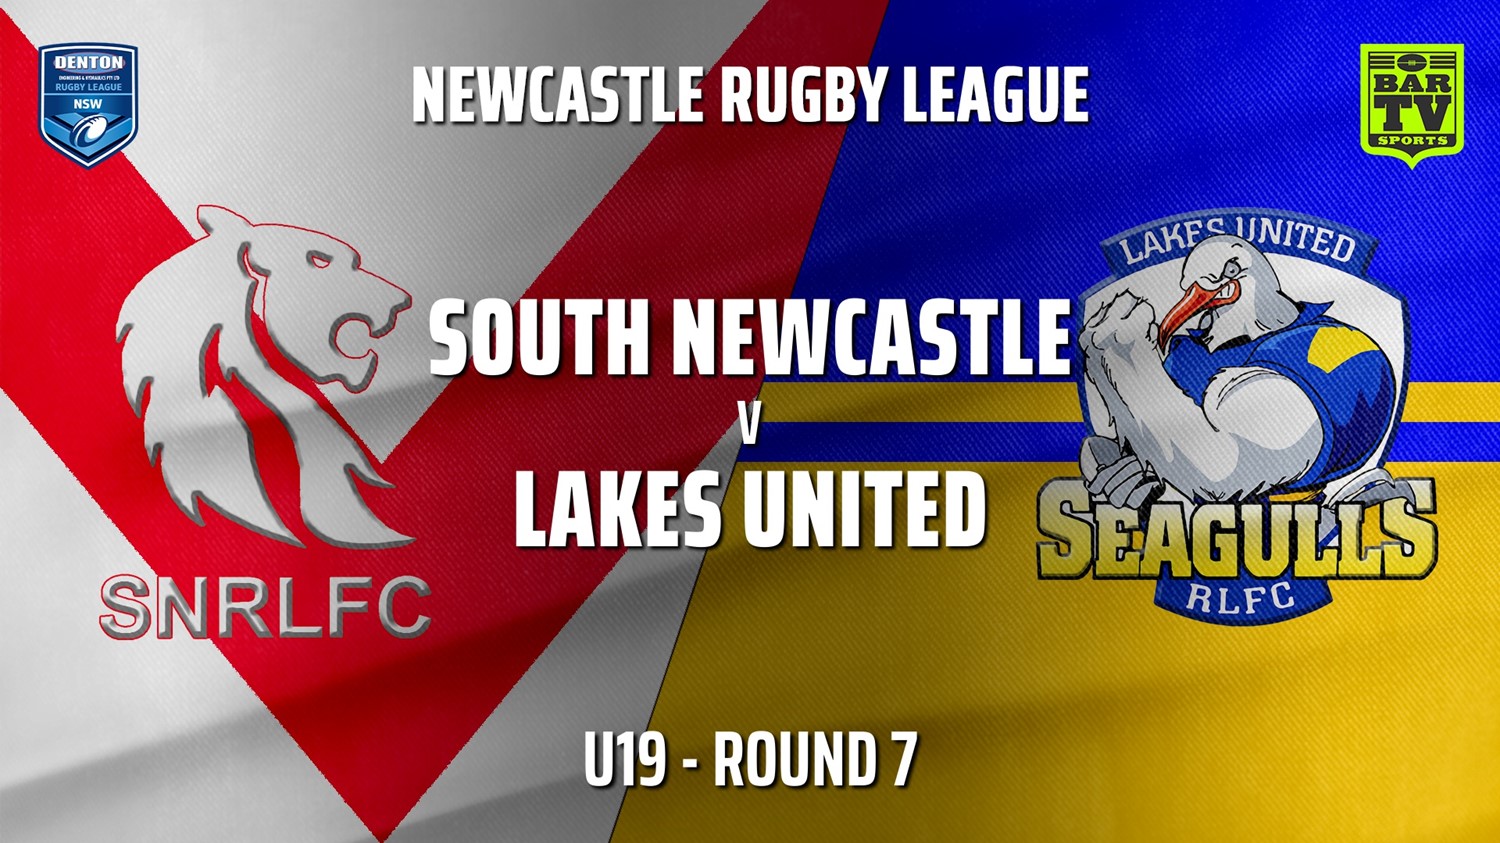 210508-Newcastle Rugby League Round 7 - U19 - South Newcastle v Lakes United Slate Image